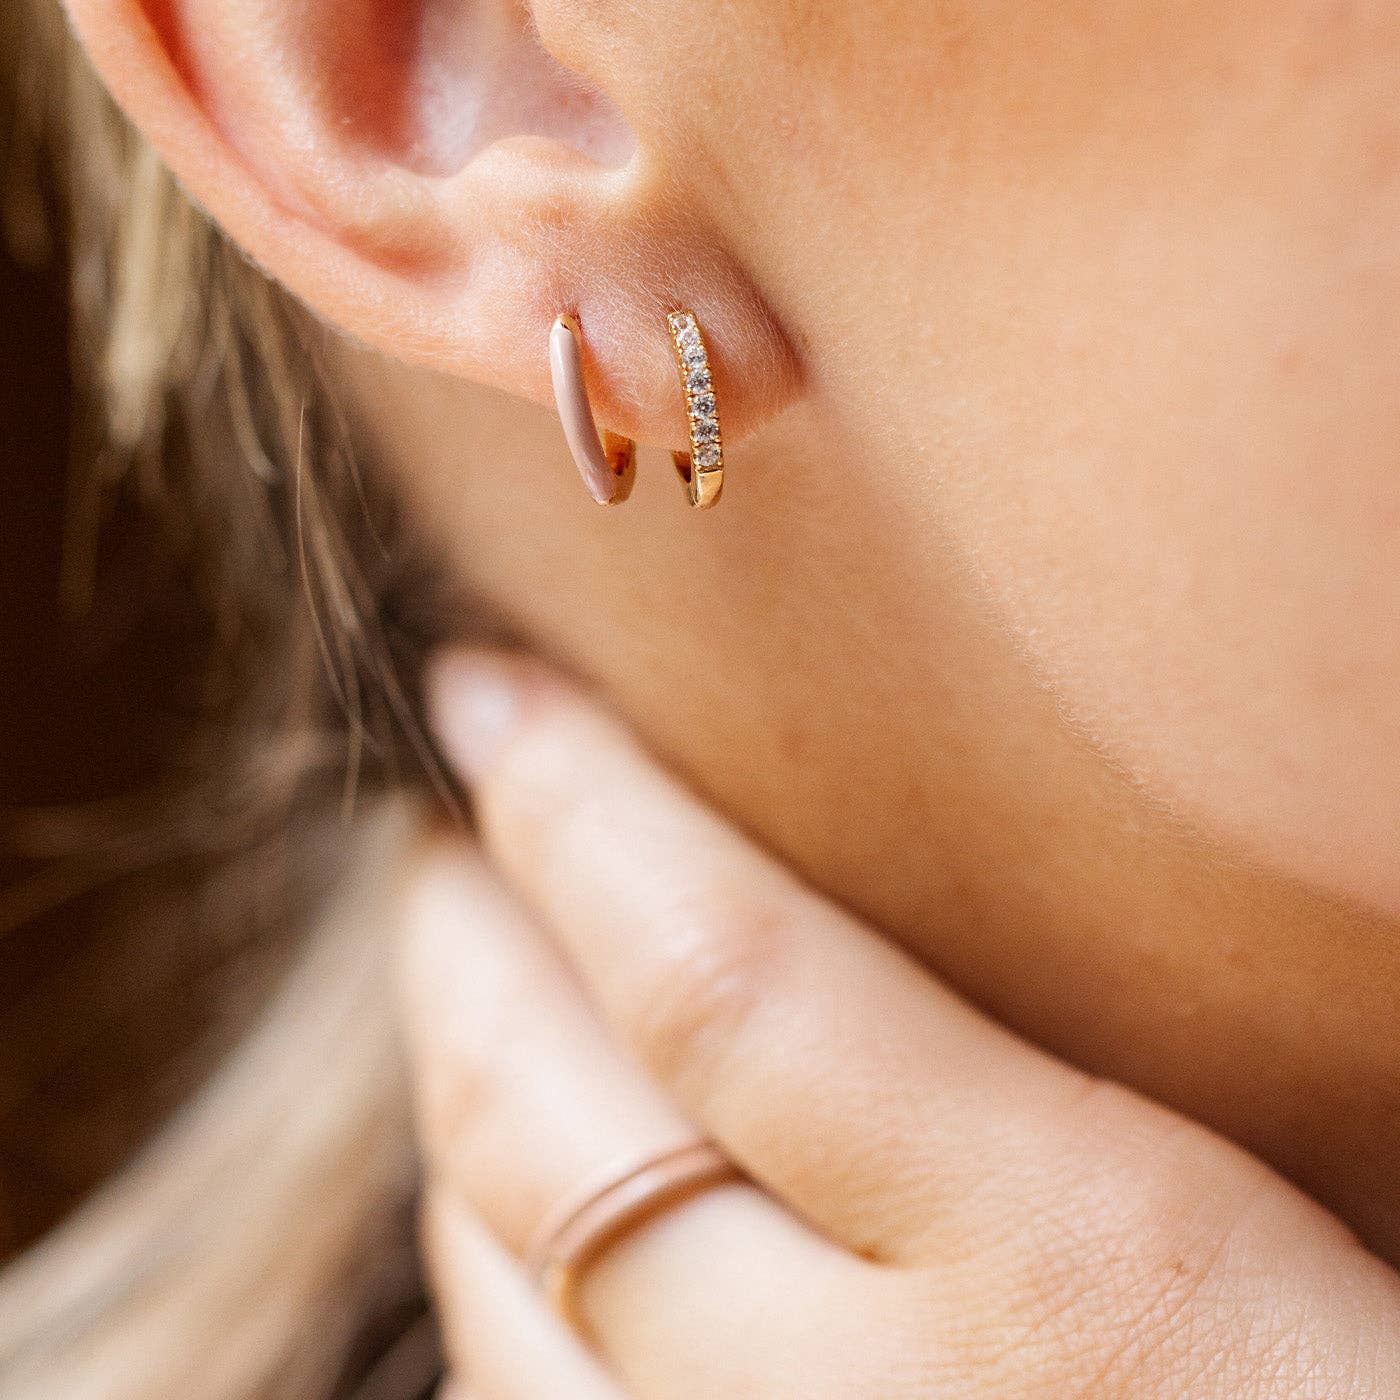 CZ Enamel Hoop Earrings: Blush / Gold Vermeil